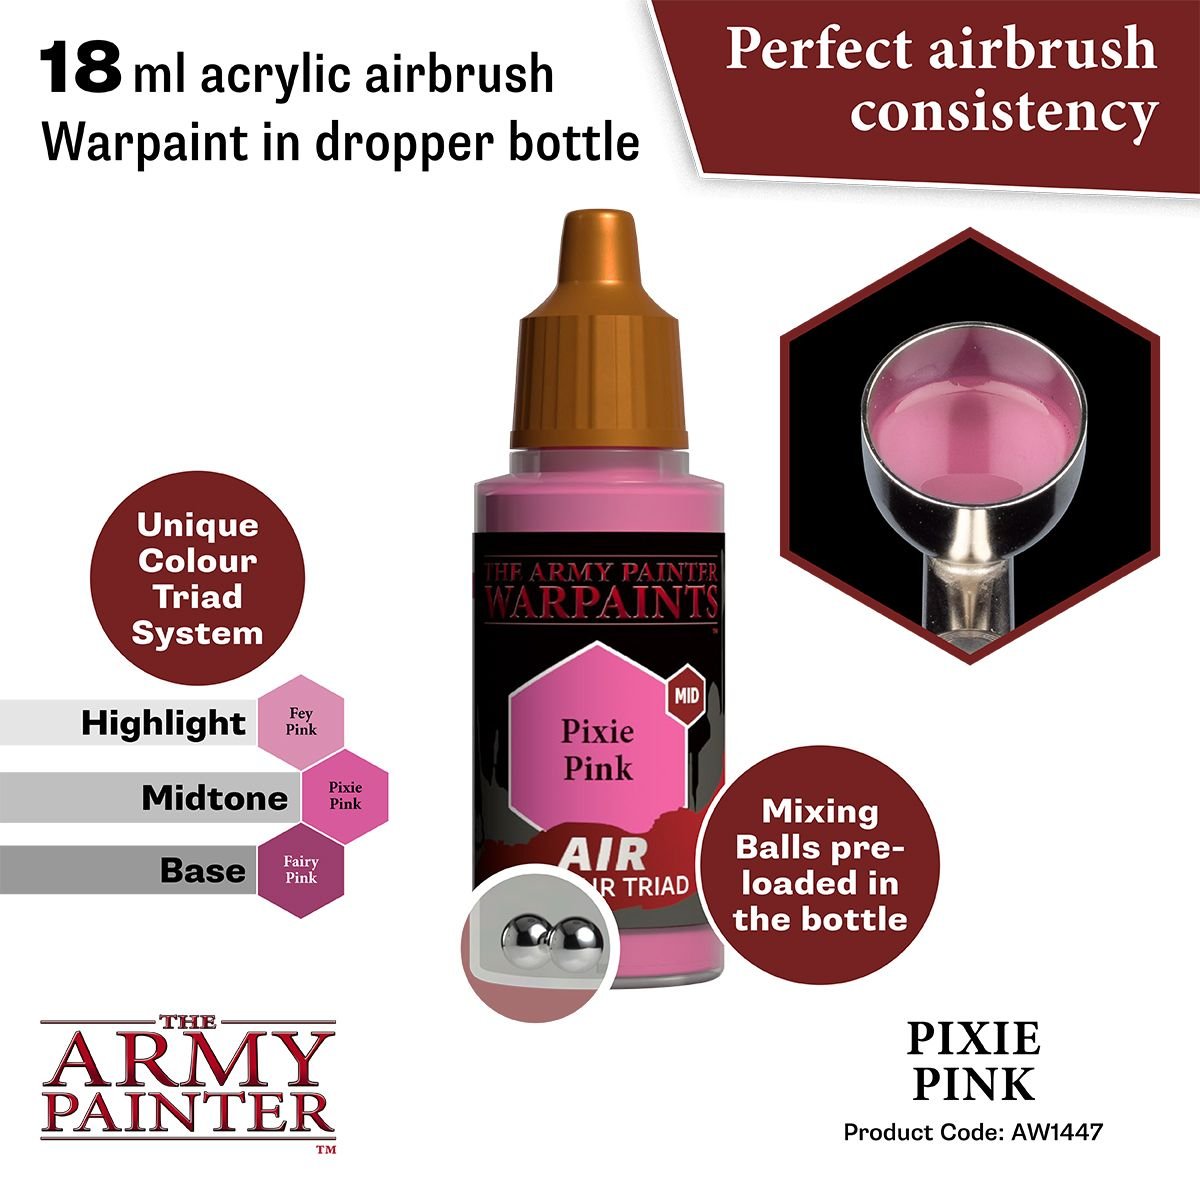 The Army Painter - Warpaints Air: Pixie Pink (18ml/0.6oz)